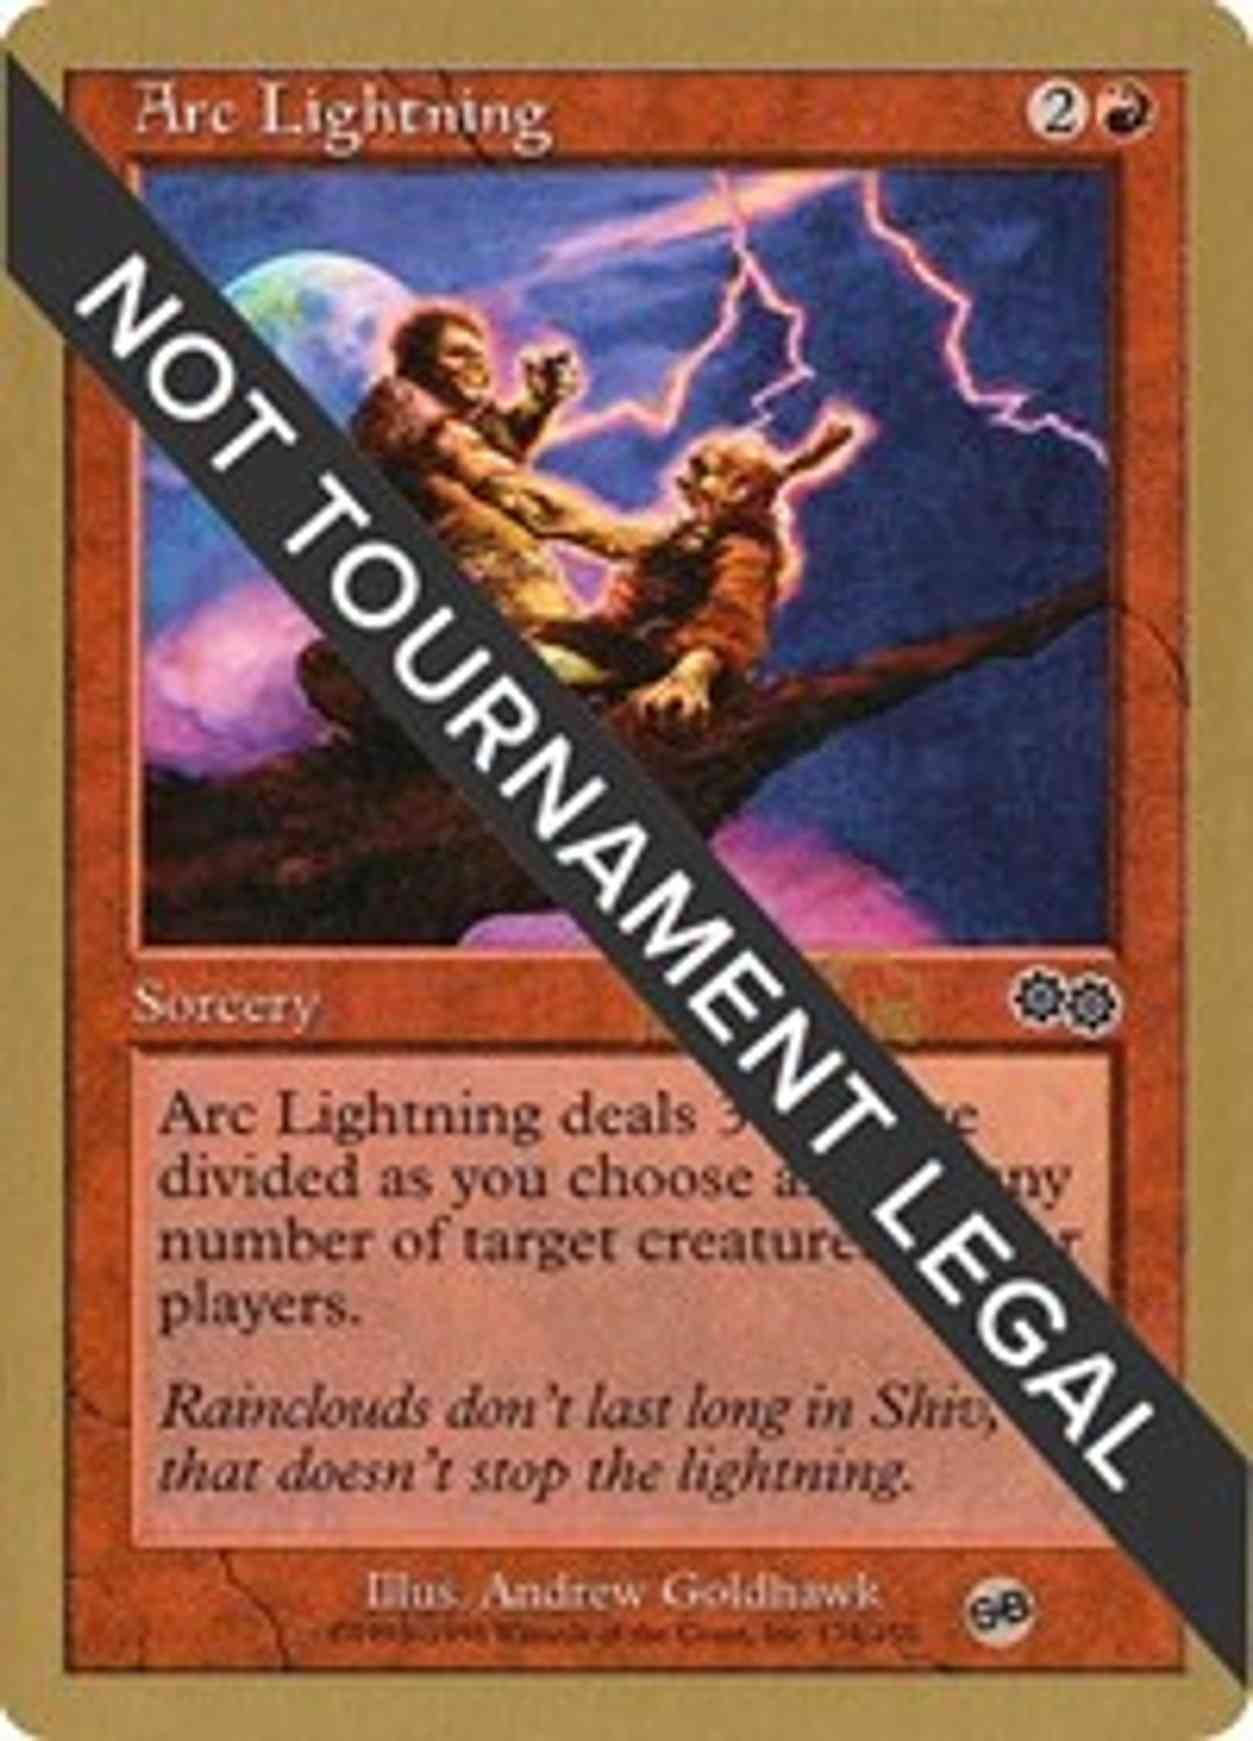 Arc Lightning - 1999 Mark Le Pine (USG) magic card front